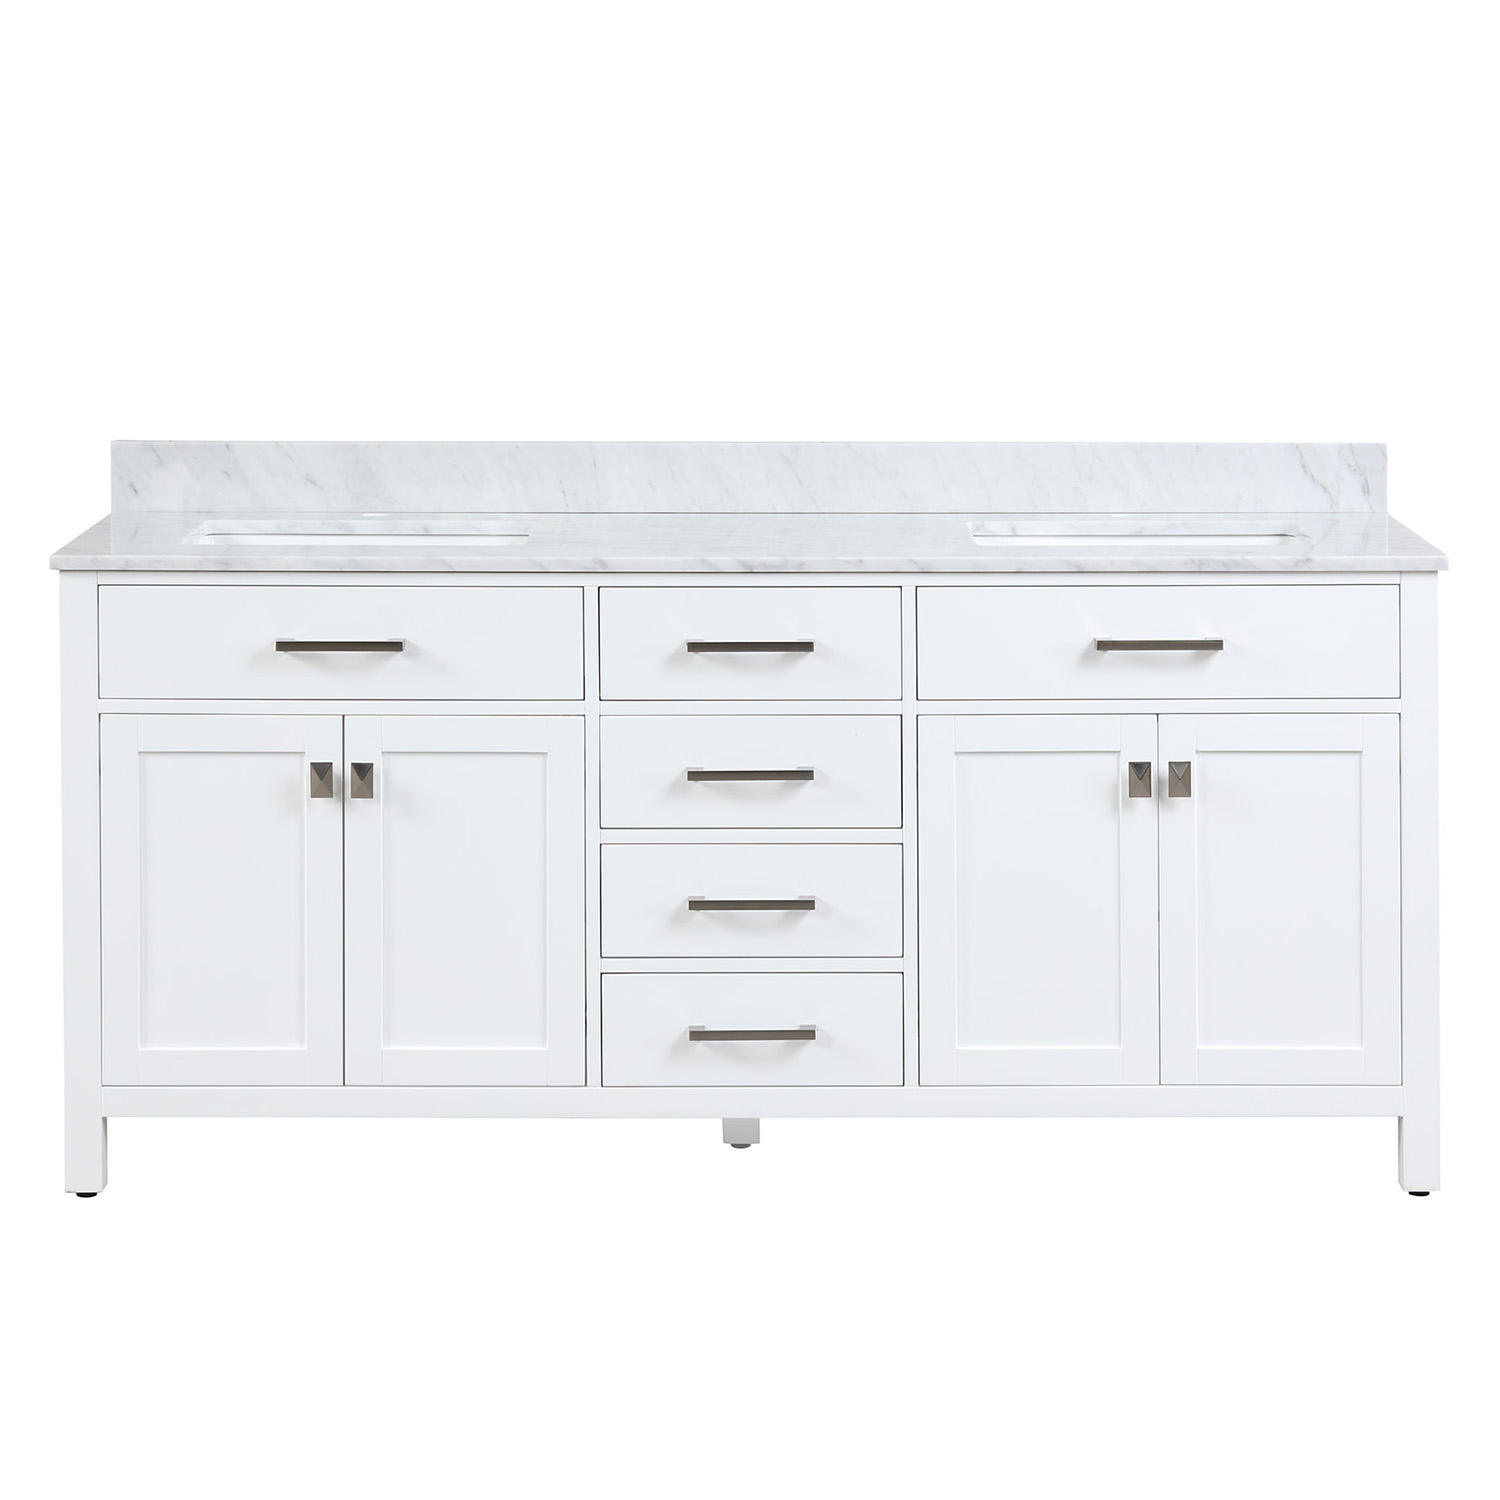 Duko VV172 Rectangular Sink White Bathroom Vanity Cabinet with Carrara White Marble Countertop 